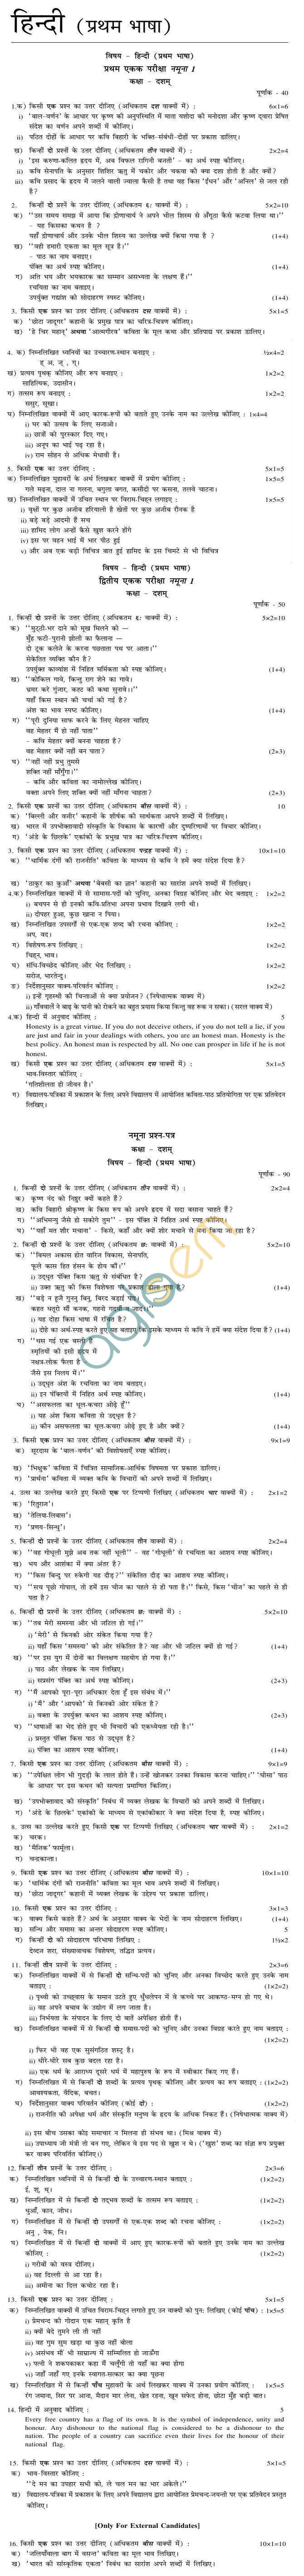 WB Board Sample Question Papers for Madhyamik Pariksha (Class 10) - Hindi